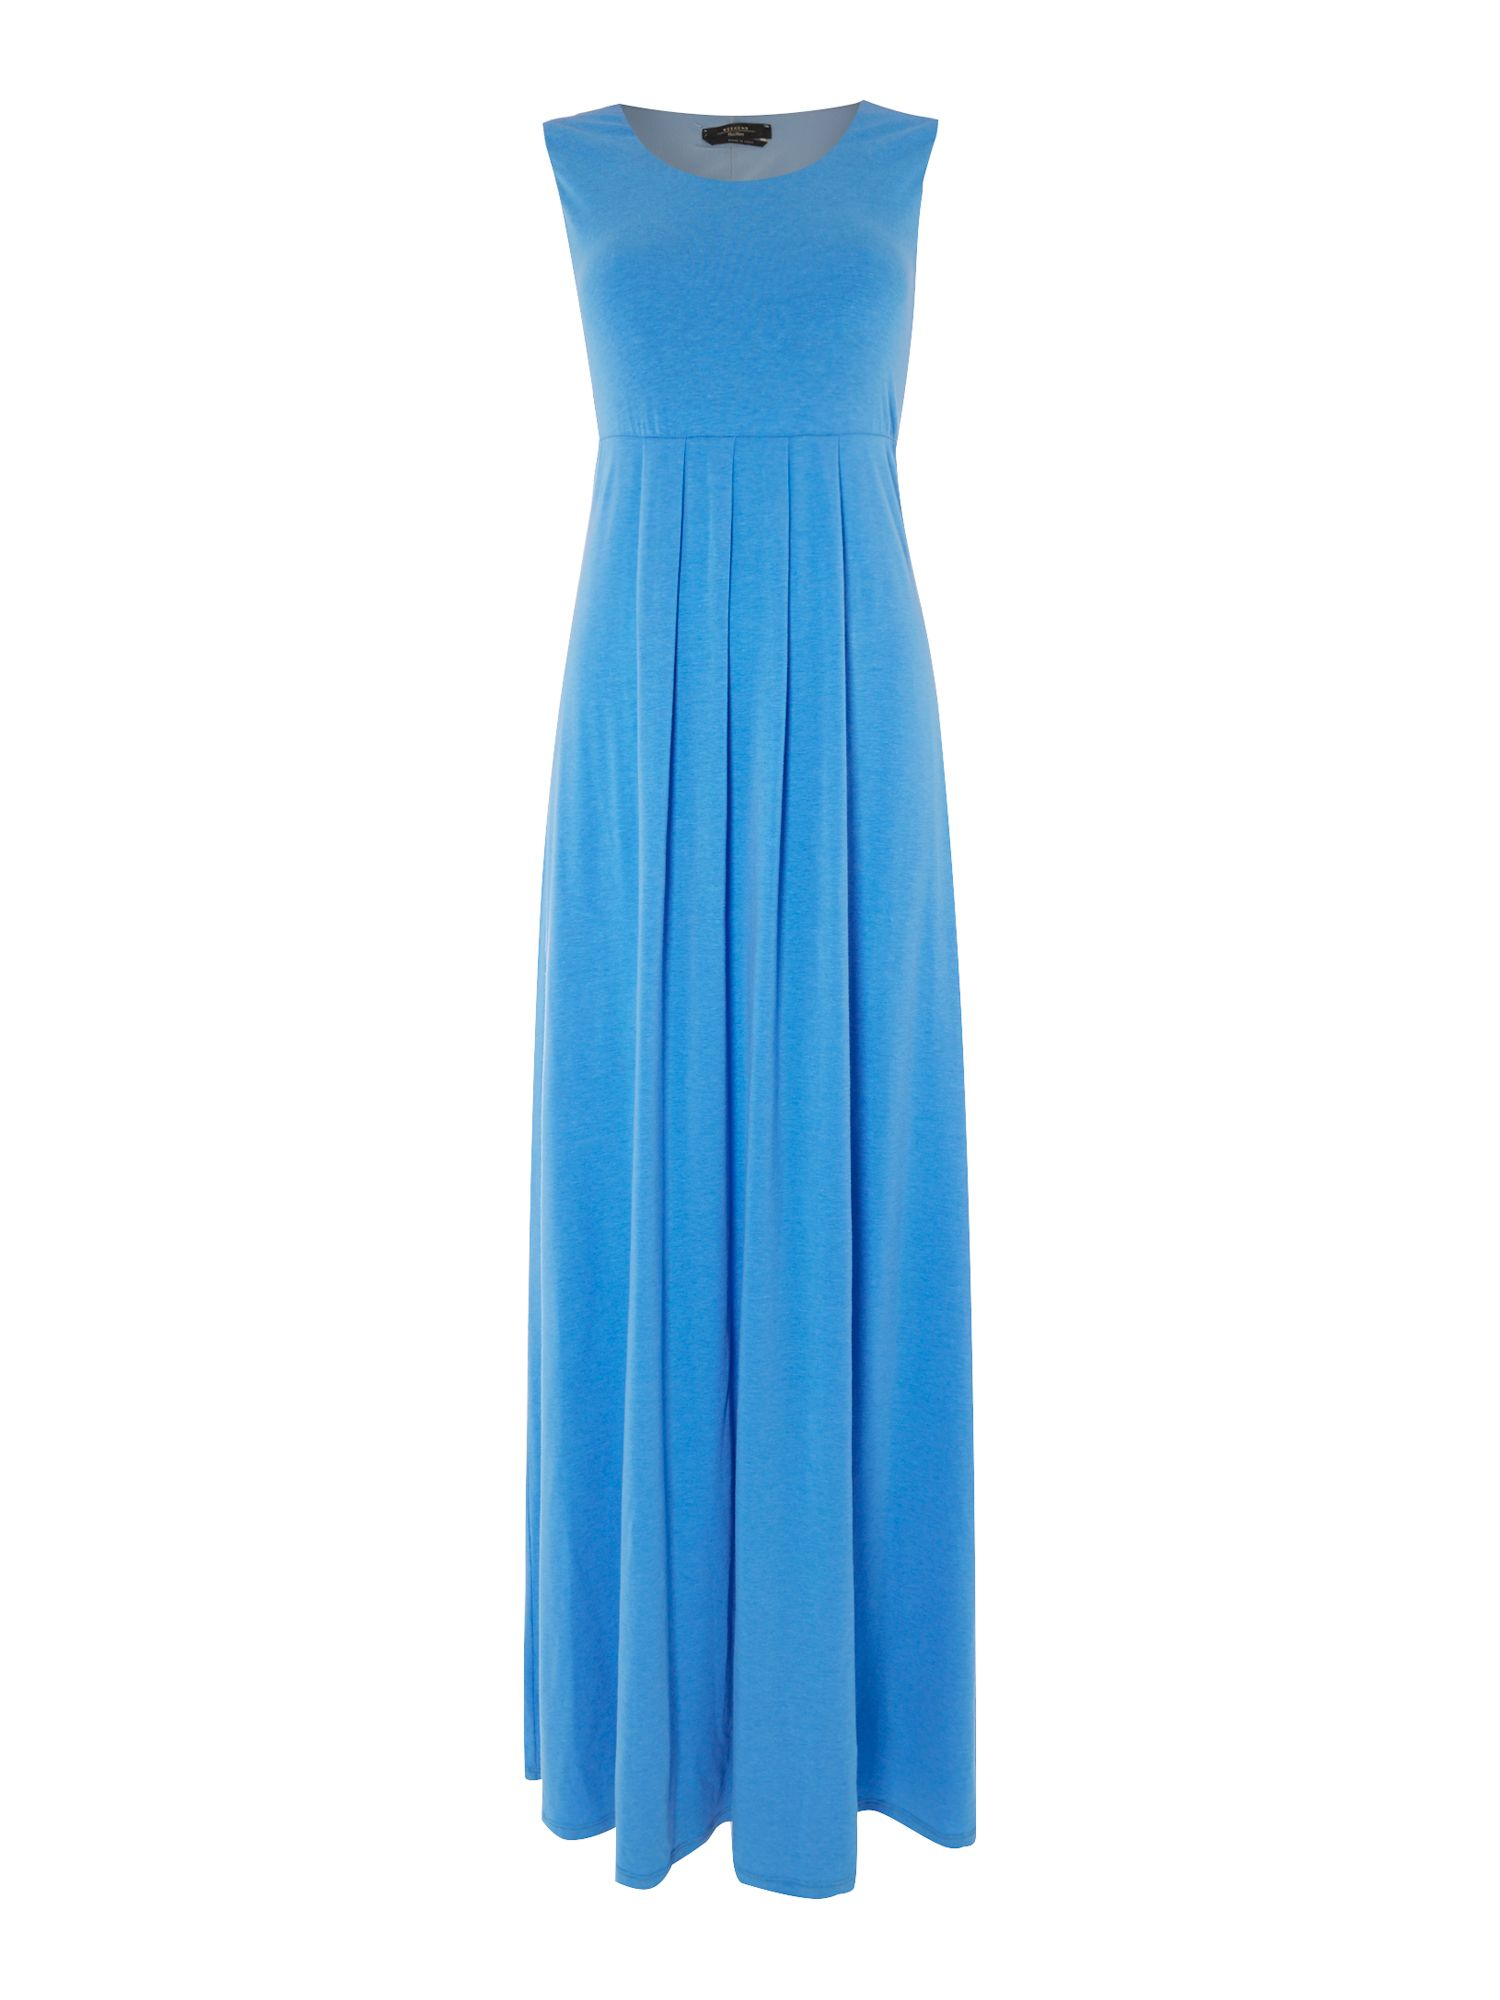 Max mara Malaga Sleeveless Maxi Dress in Blue | Lyst